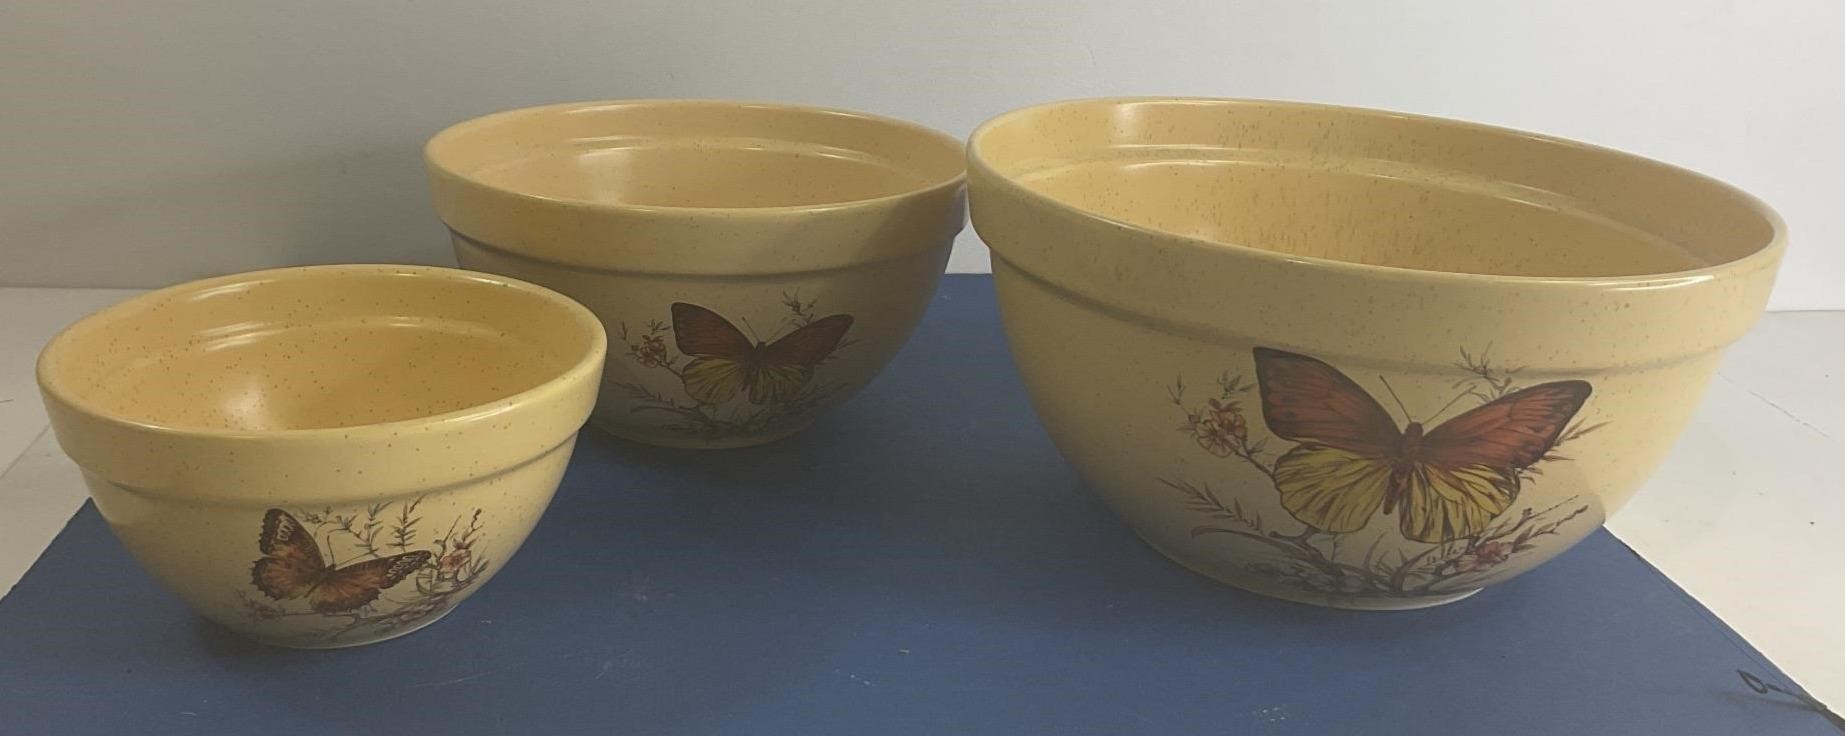 Treasure Craft Pottery Bowls